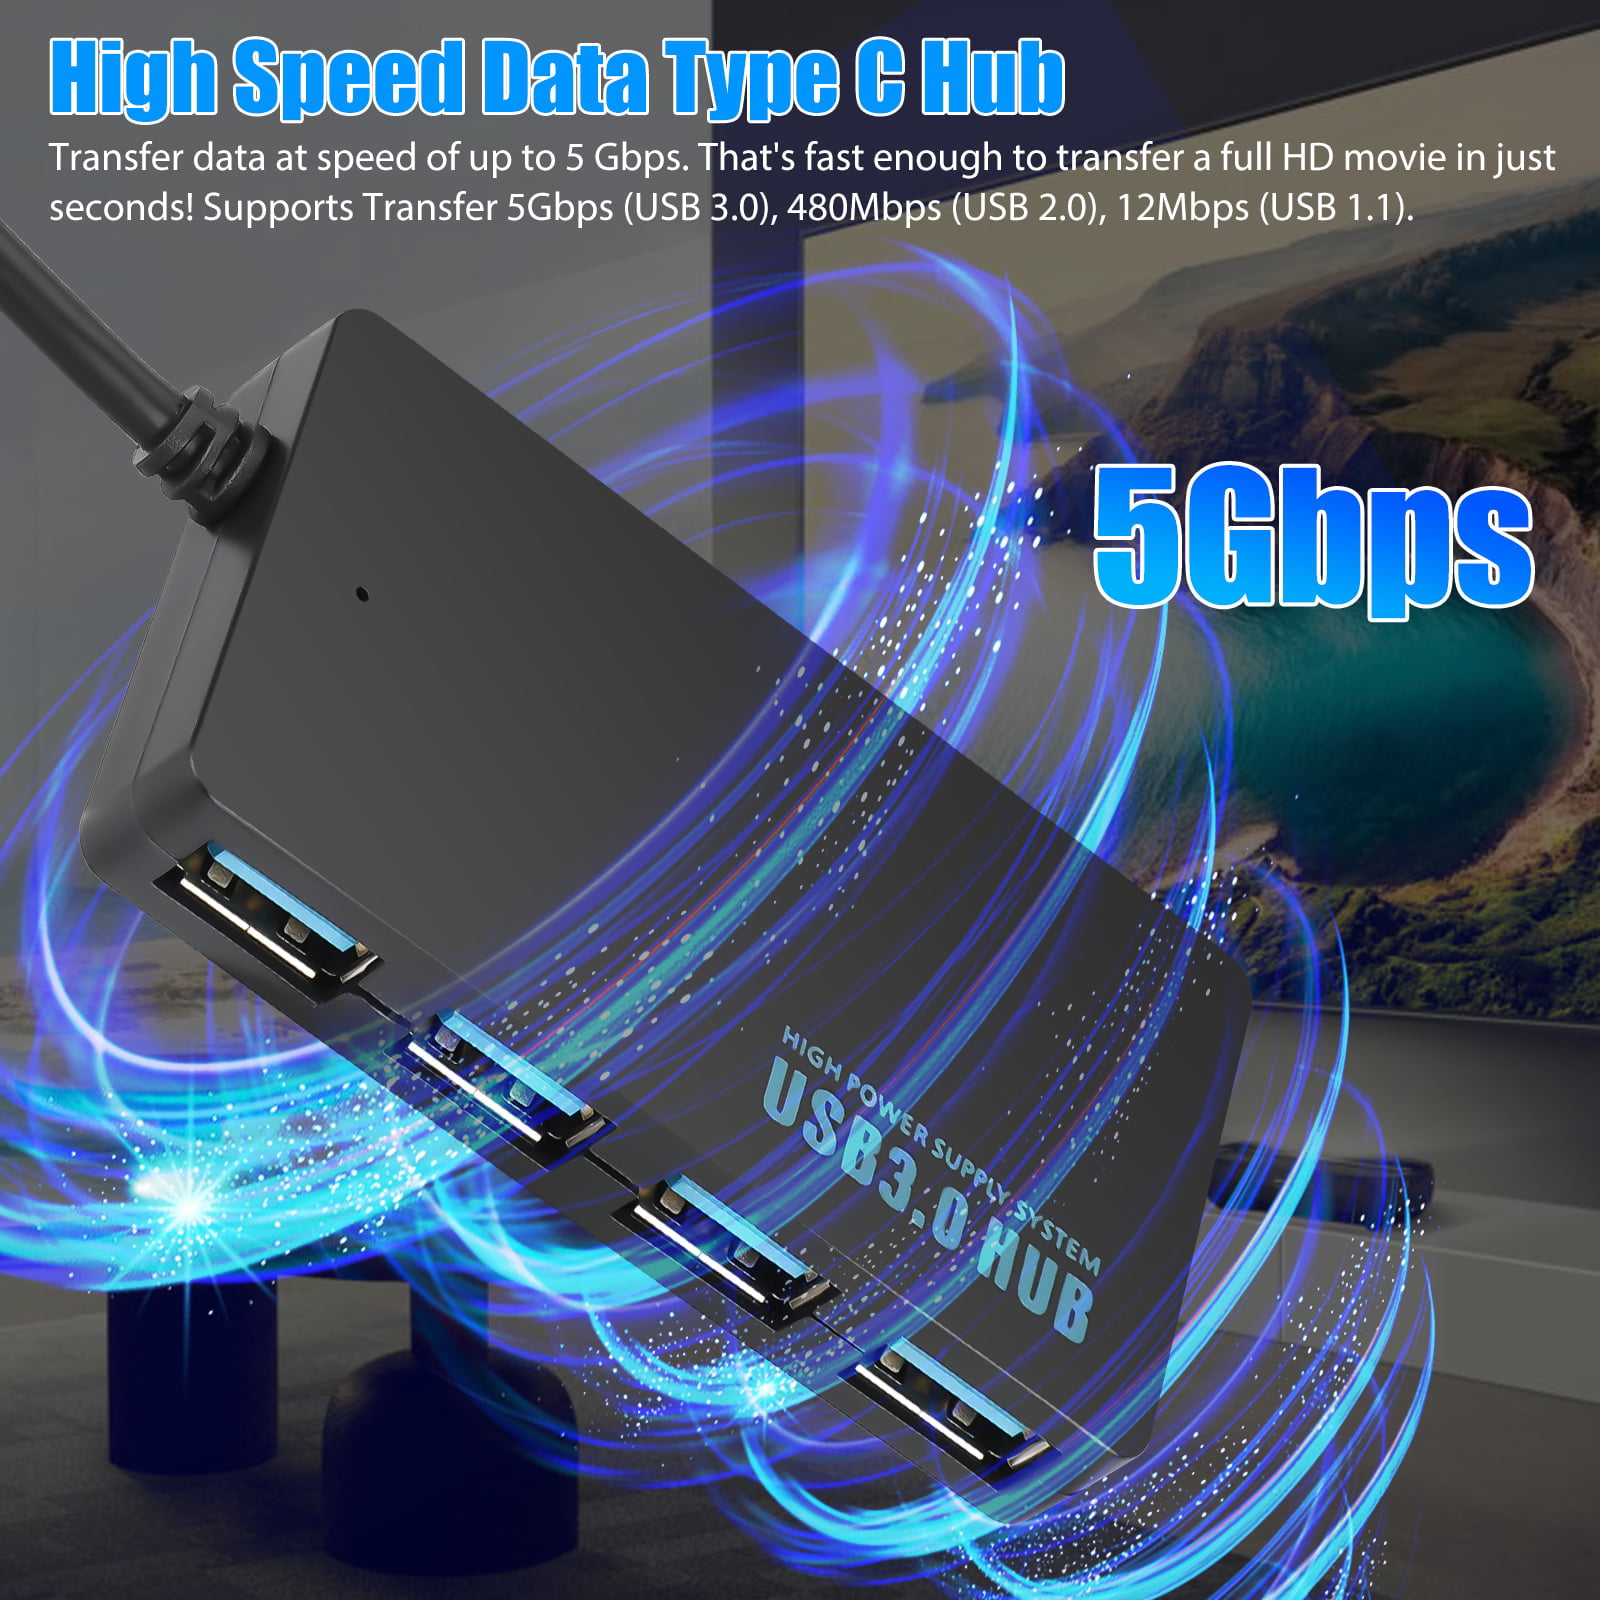 USB C Hub, TSV USB C Splitter Type-C to USB 3.0 Hub Adapter with 4 USB 3.0  Ports, Portable Data Hub for MacBook Pro/Air, iPad Pro, Chromebook, XPS,  Mac Mini Pro, Laptop, Flash Drive, Mobile HDD 